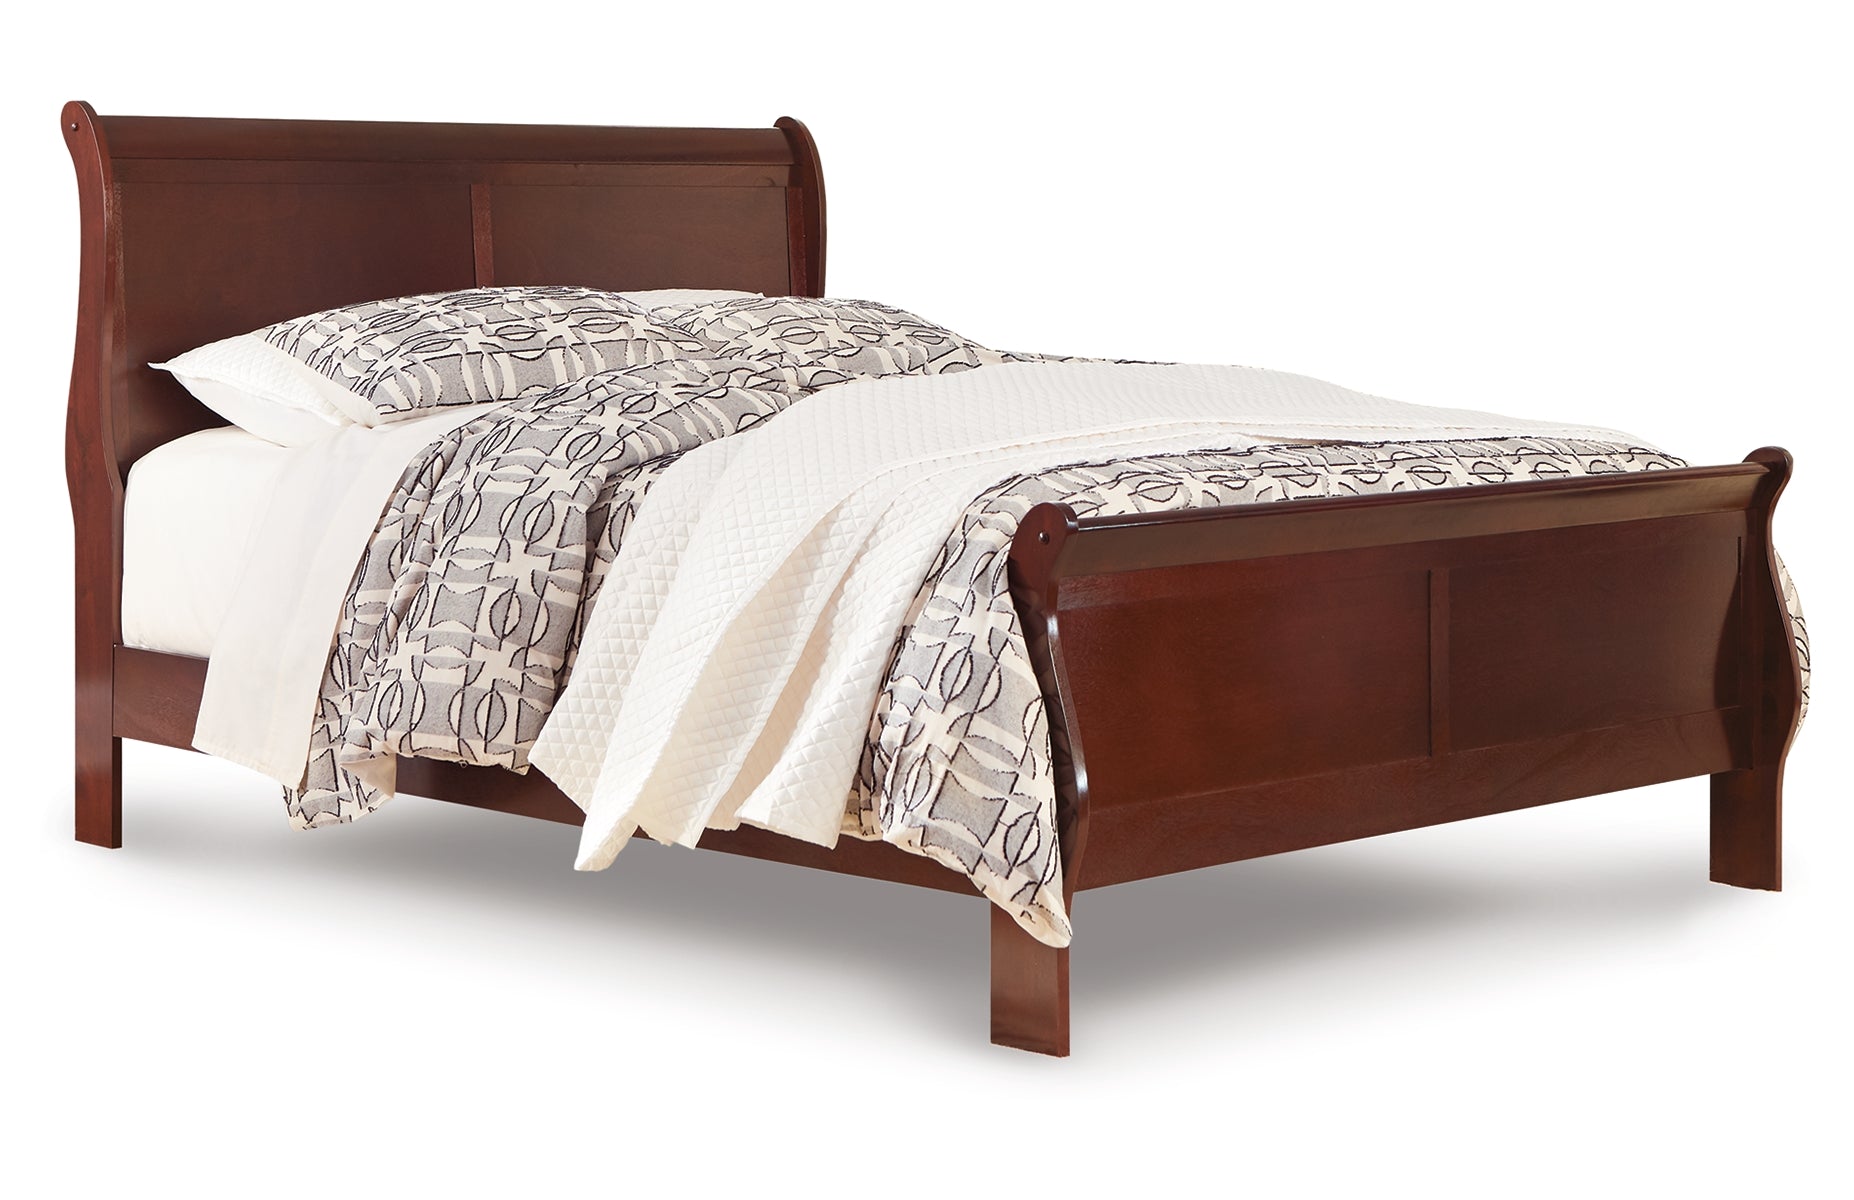 Alisdair King Sleigh Bed with Dresser